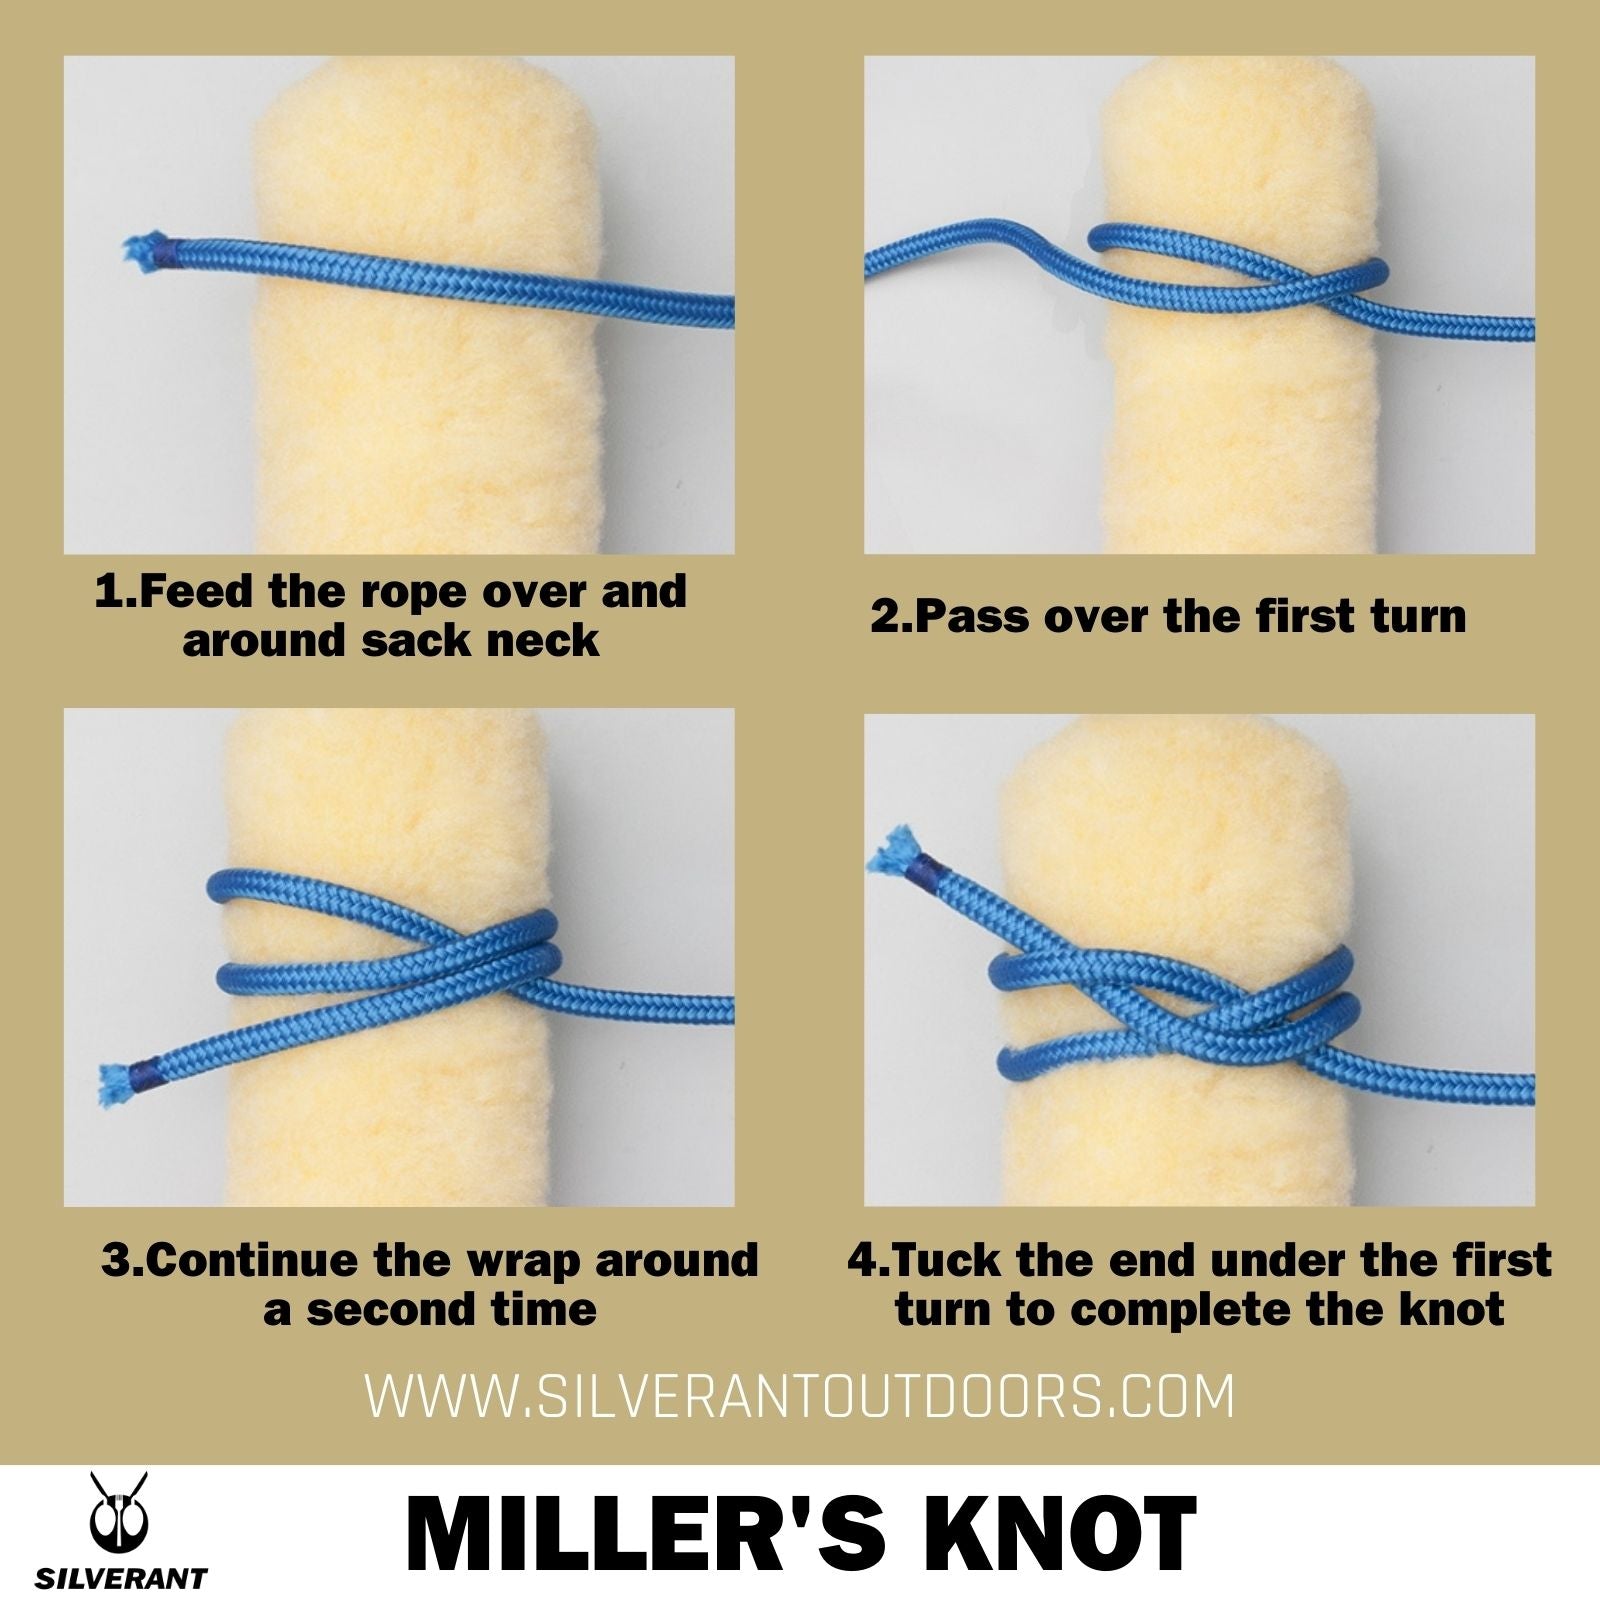 Miller's knot